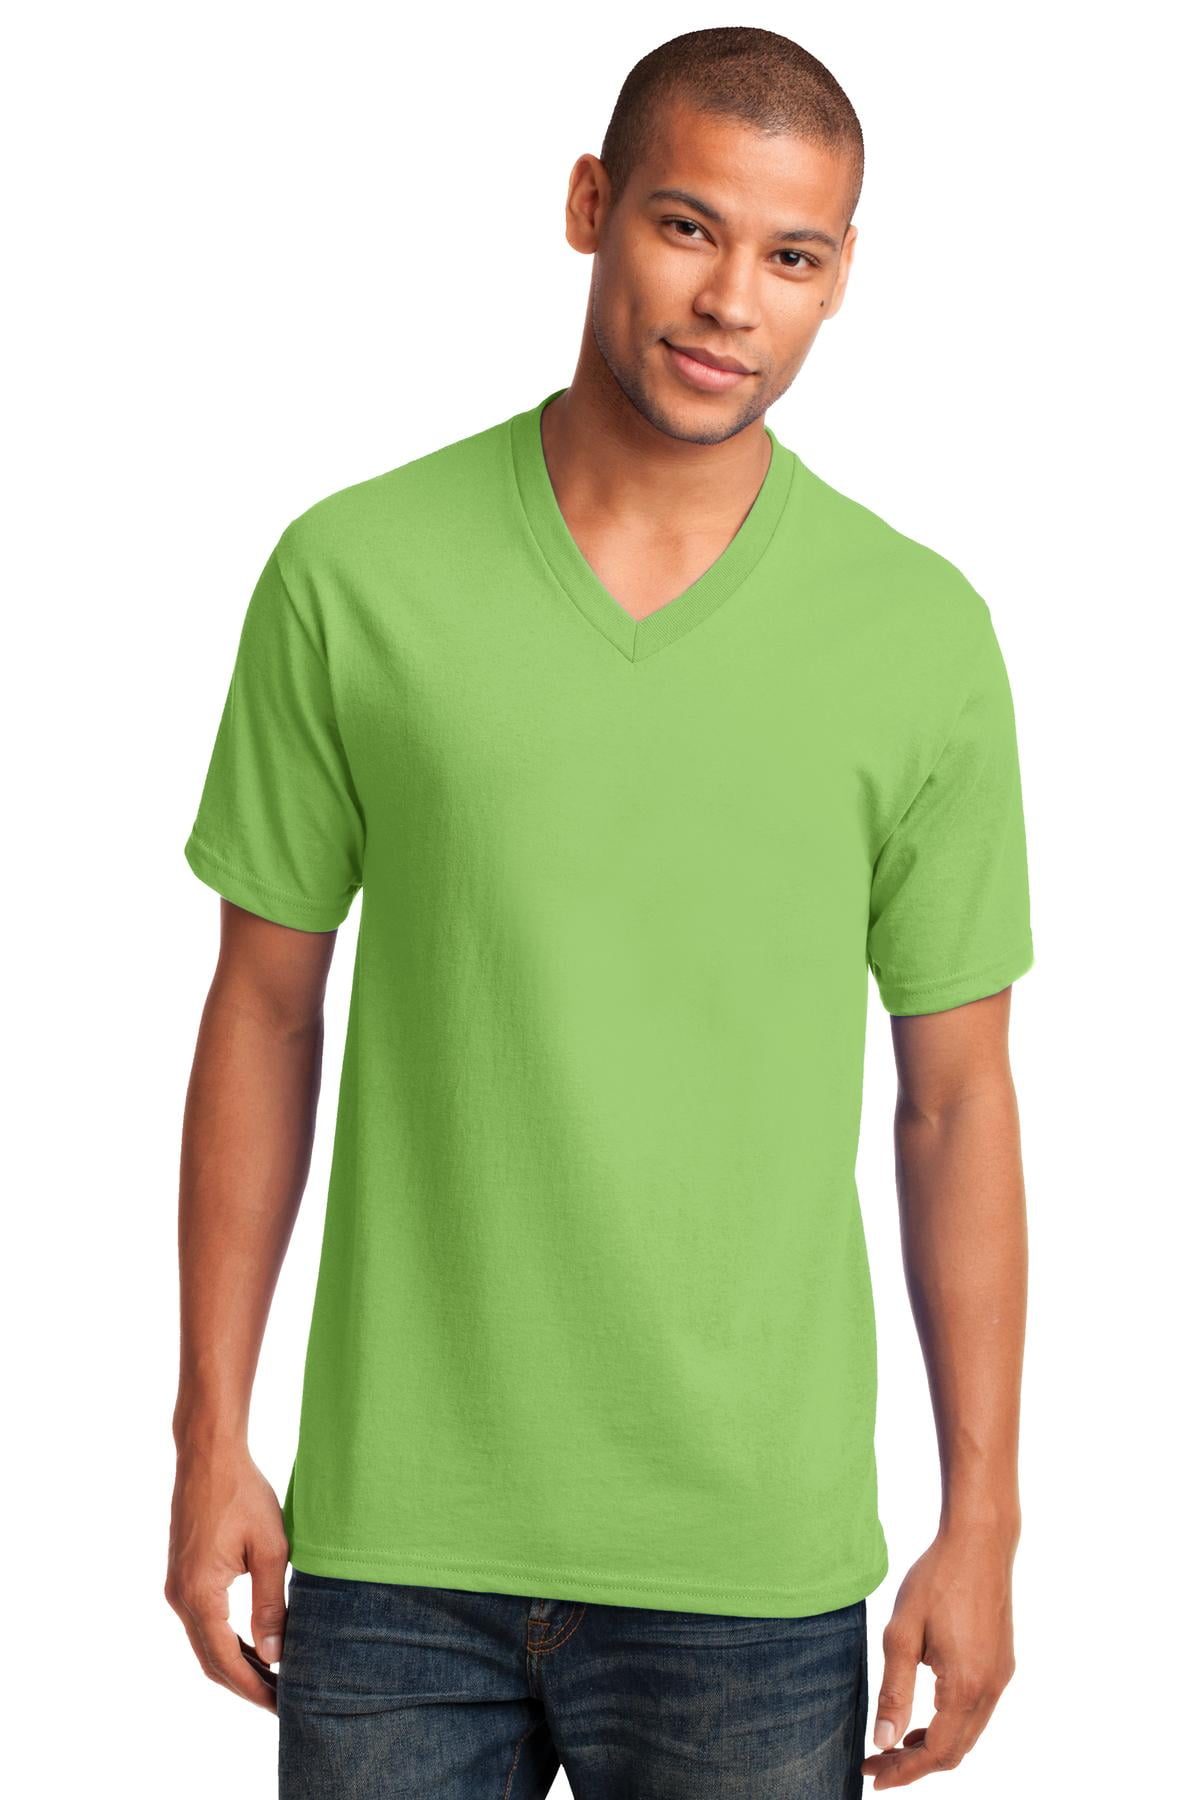 v neck green t shirt